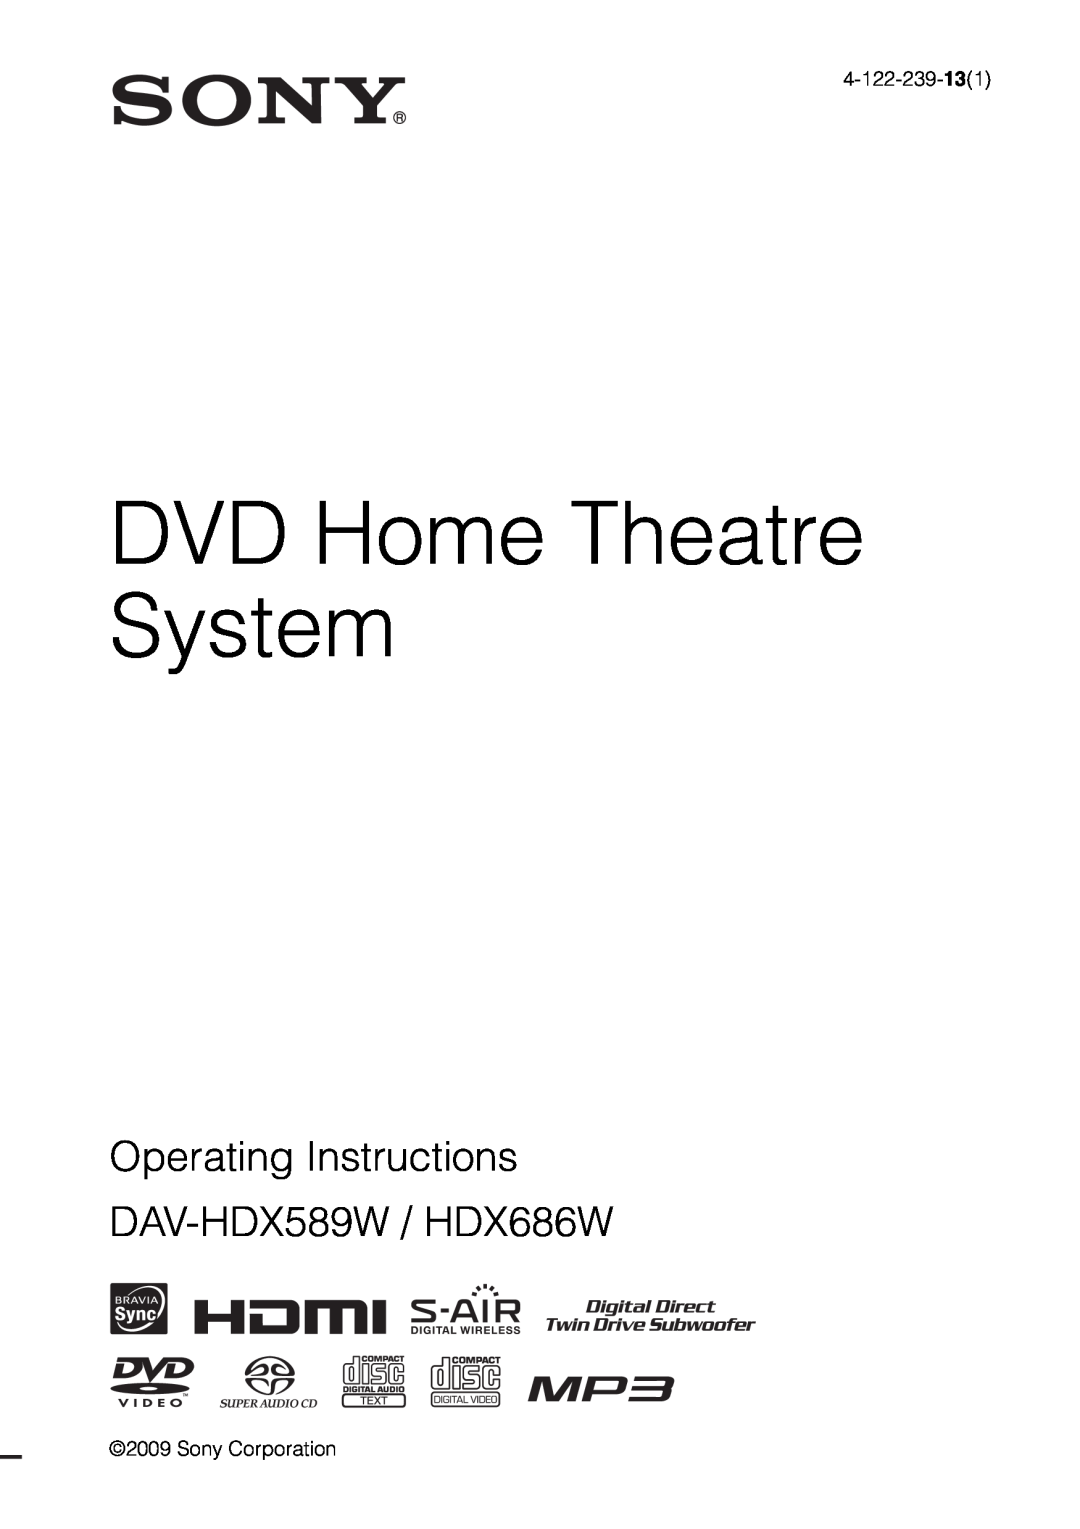 Sony DAV-HDX686W manual DVD Home Theatre System, Operating Instructions DAV-HDX589W /HDX686W 